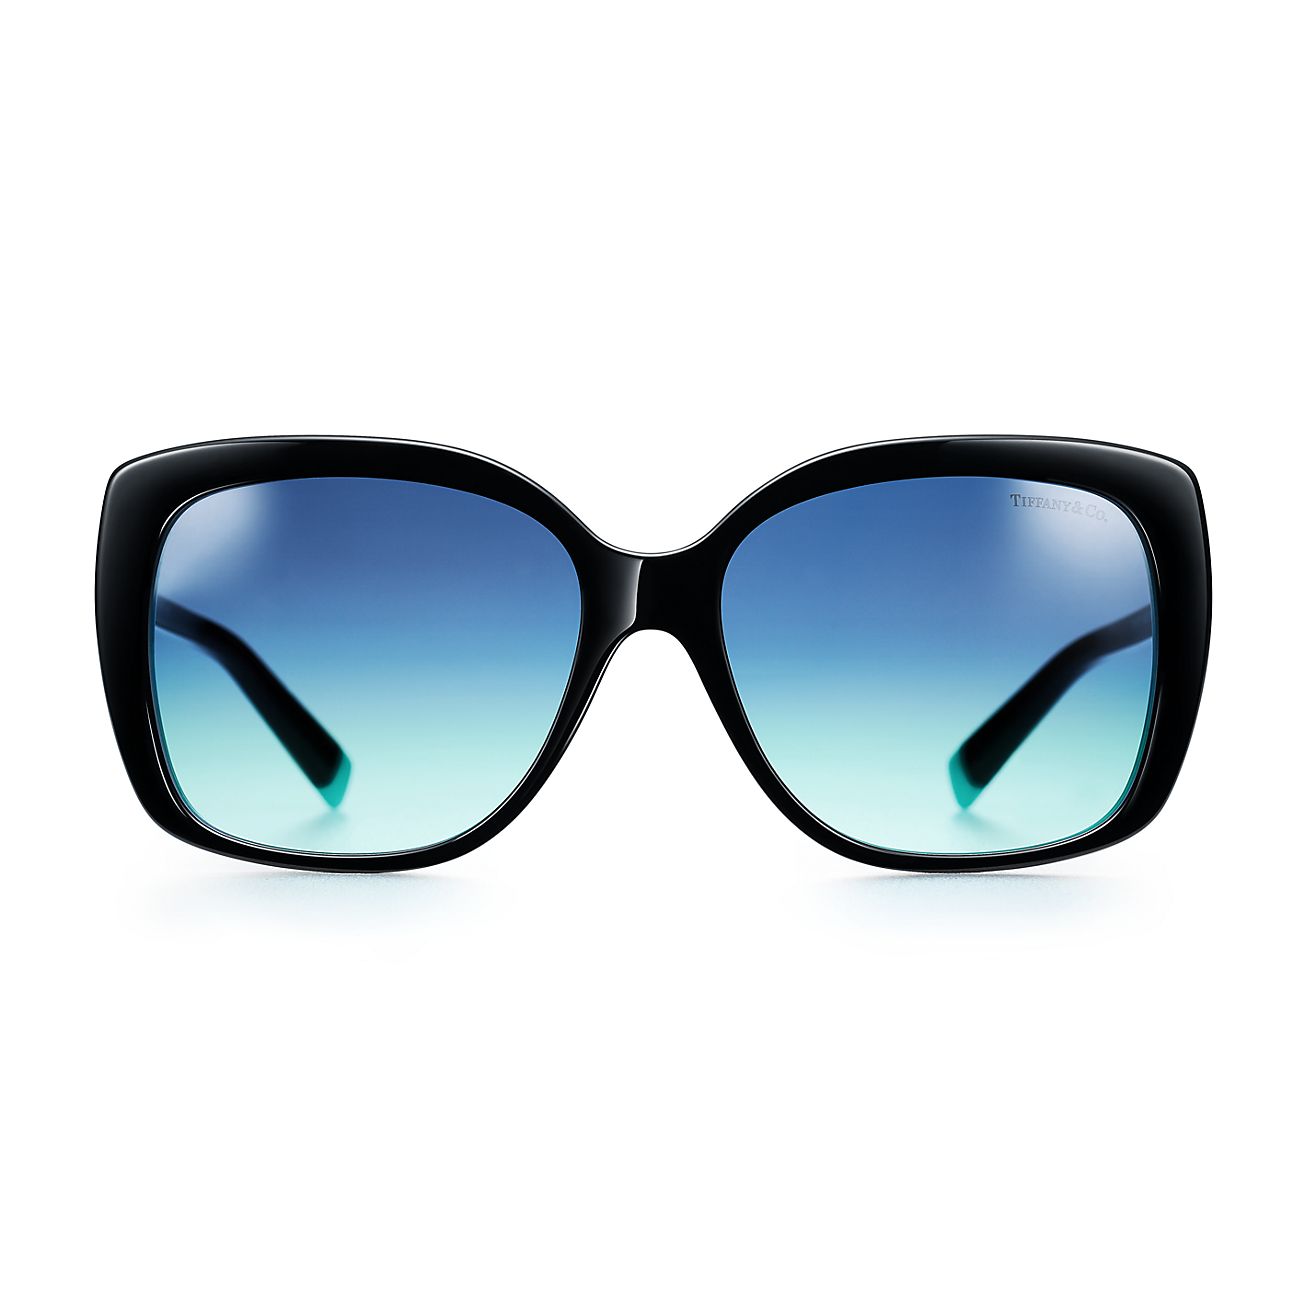 Tiffany T Square Sunglasses in Black and Tiffany Blue Acetate